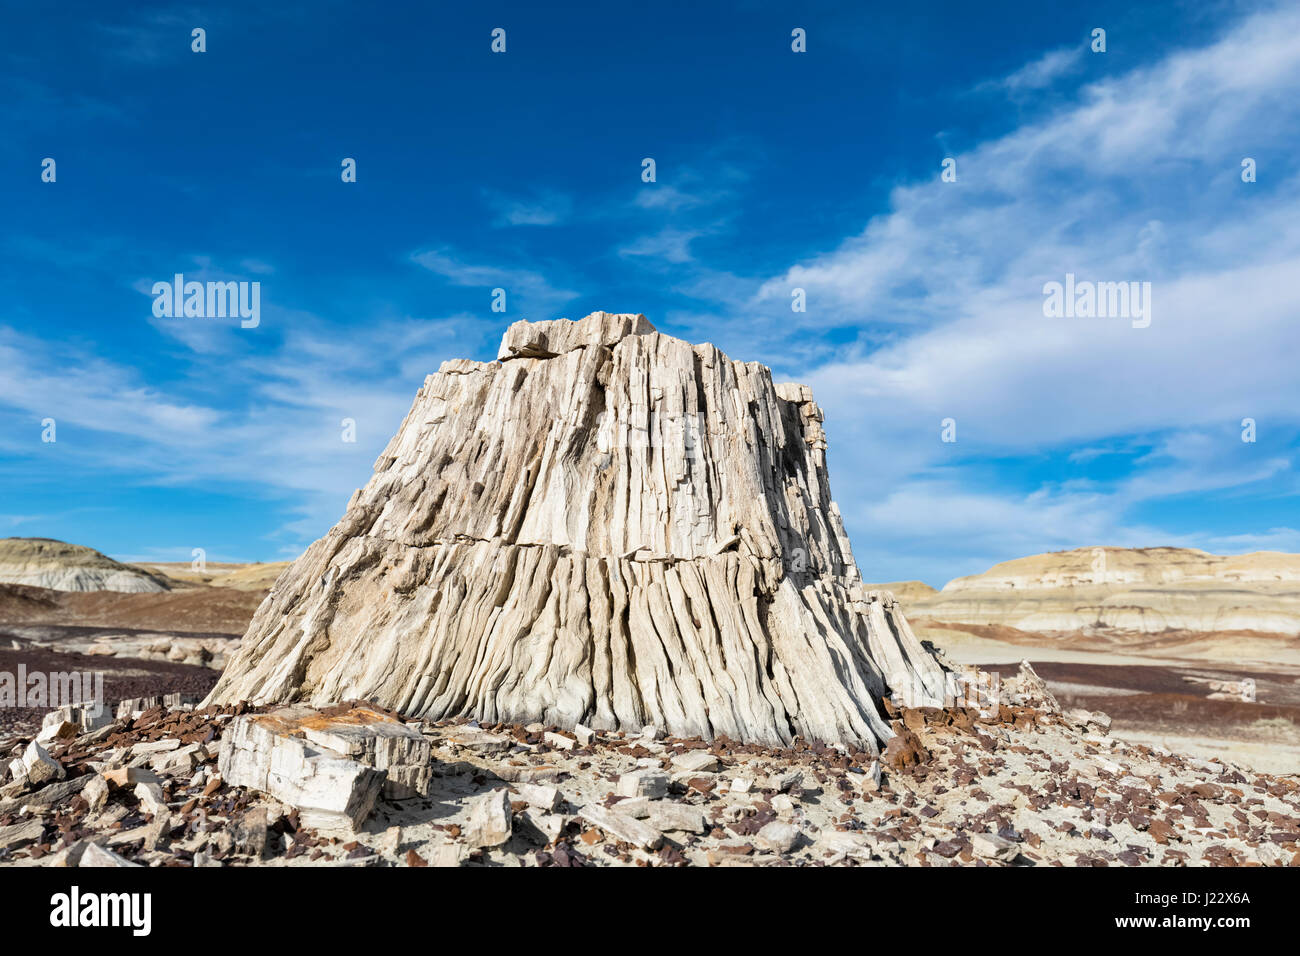 USA, New Mexico, Ah-shi-sle-pah Wash, rock formation, stone tree stump Stock Photo